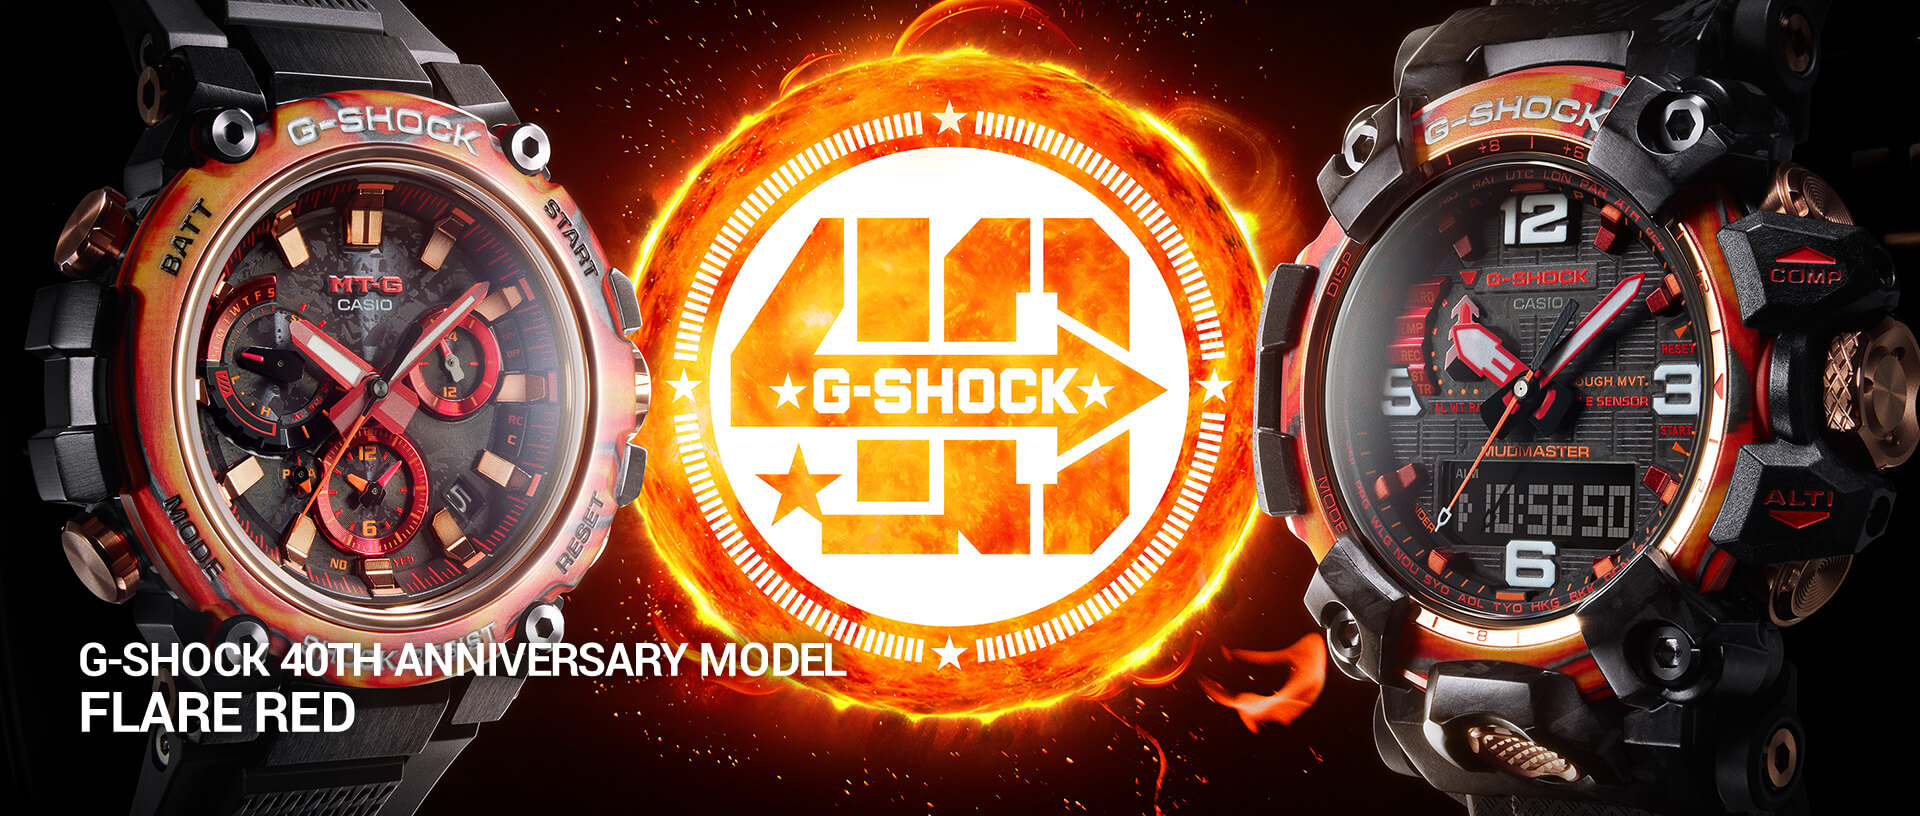 G-SHOCK 面世 40 周年纪念款 - 红焱